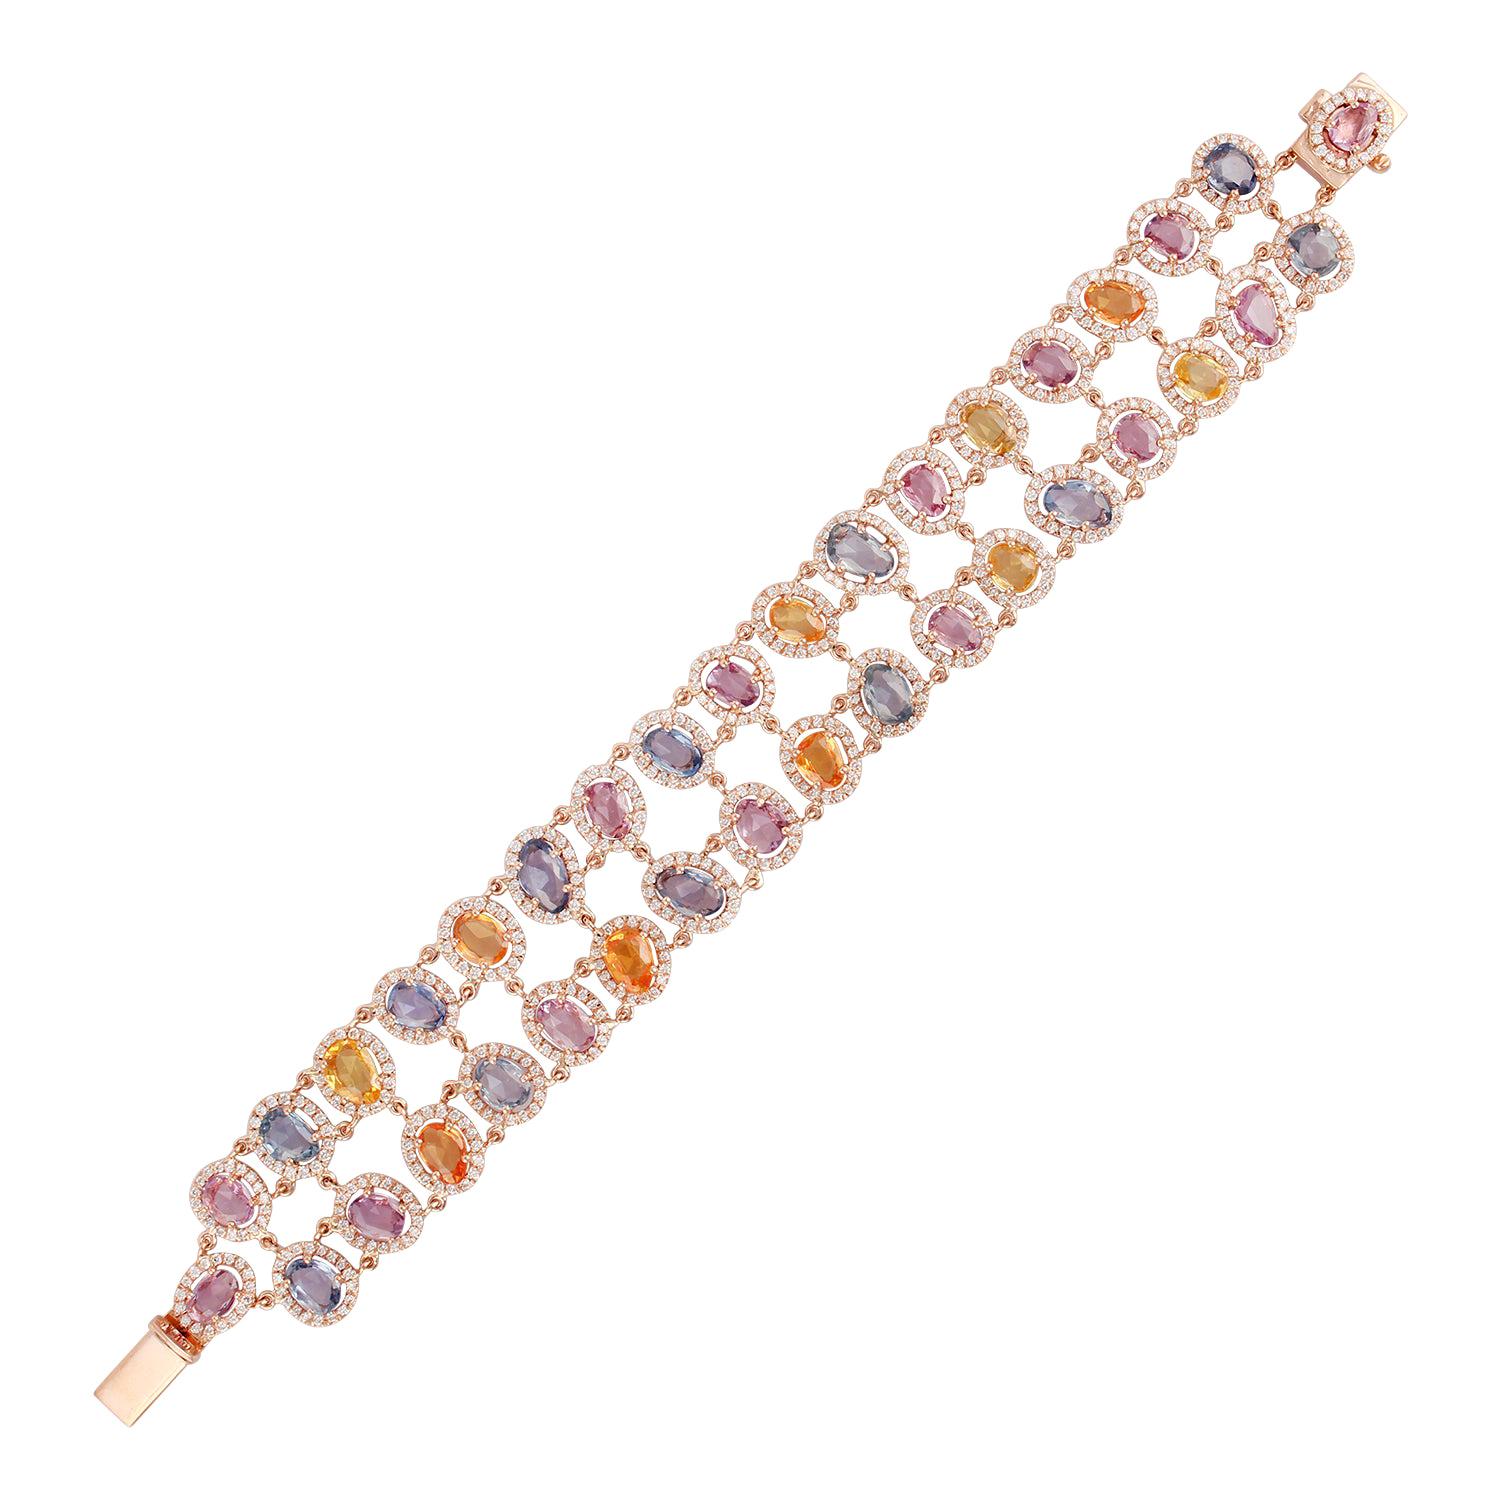 Multicolored Sapphire and Diamond Bracelet Set in 18 Karat Rose Gold